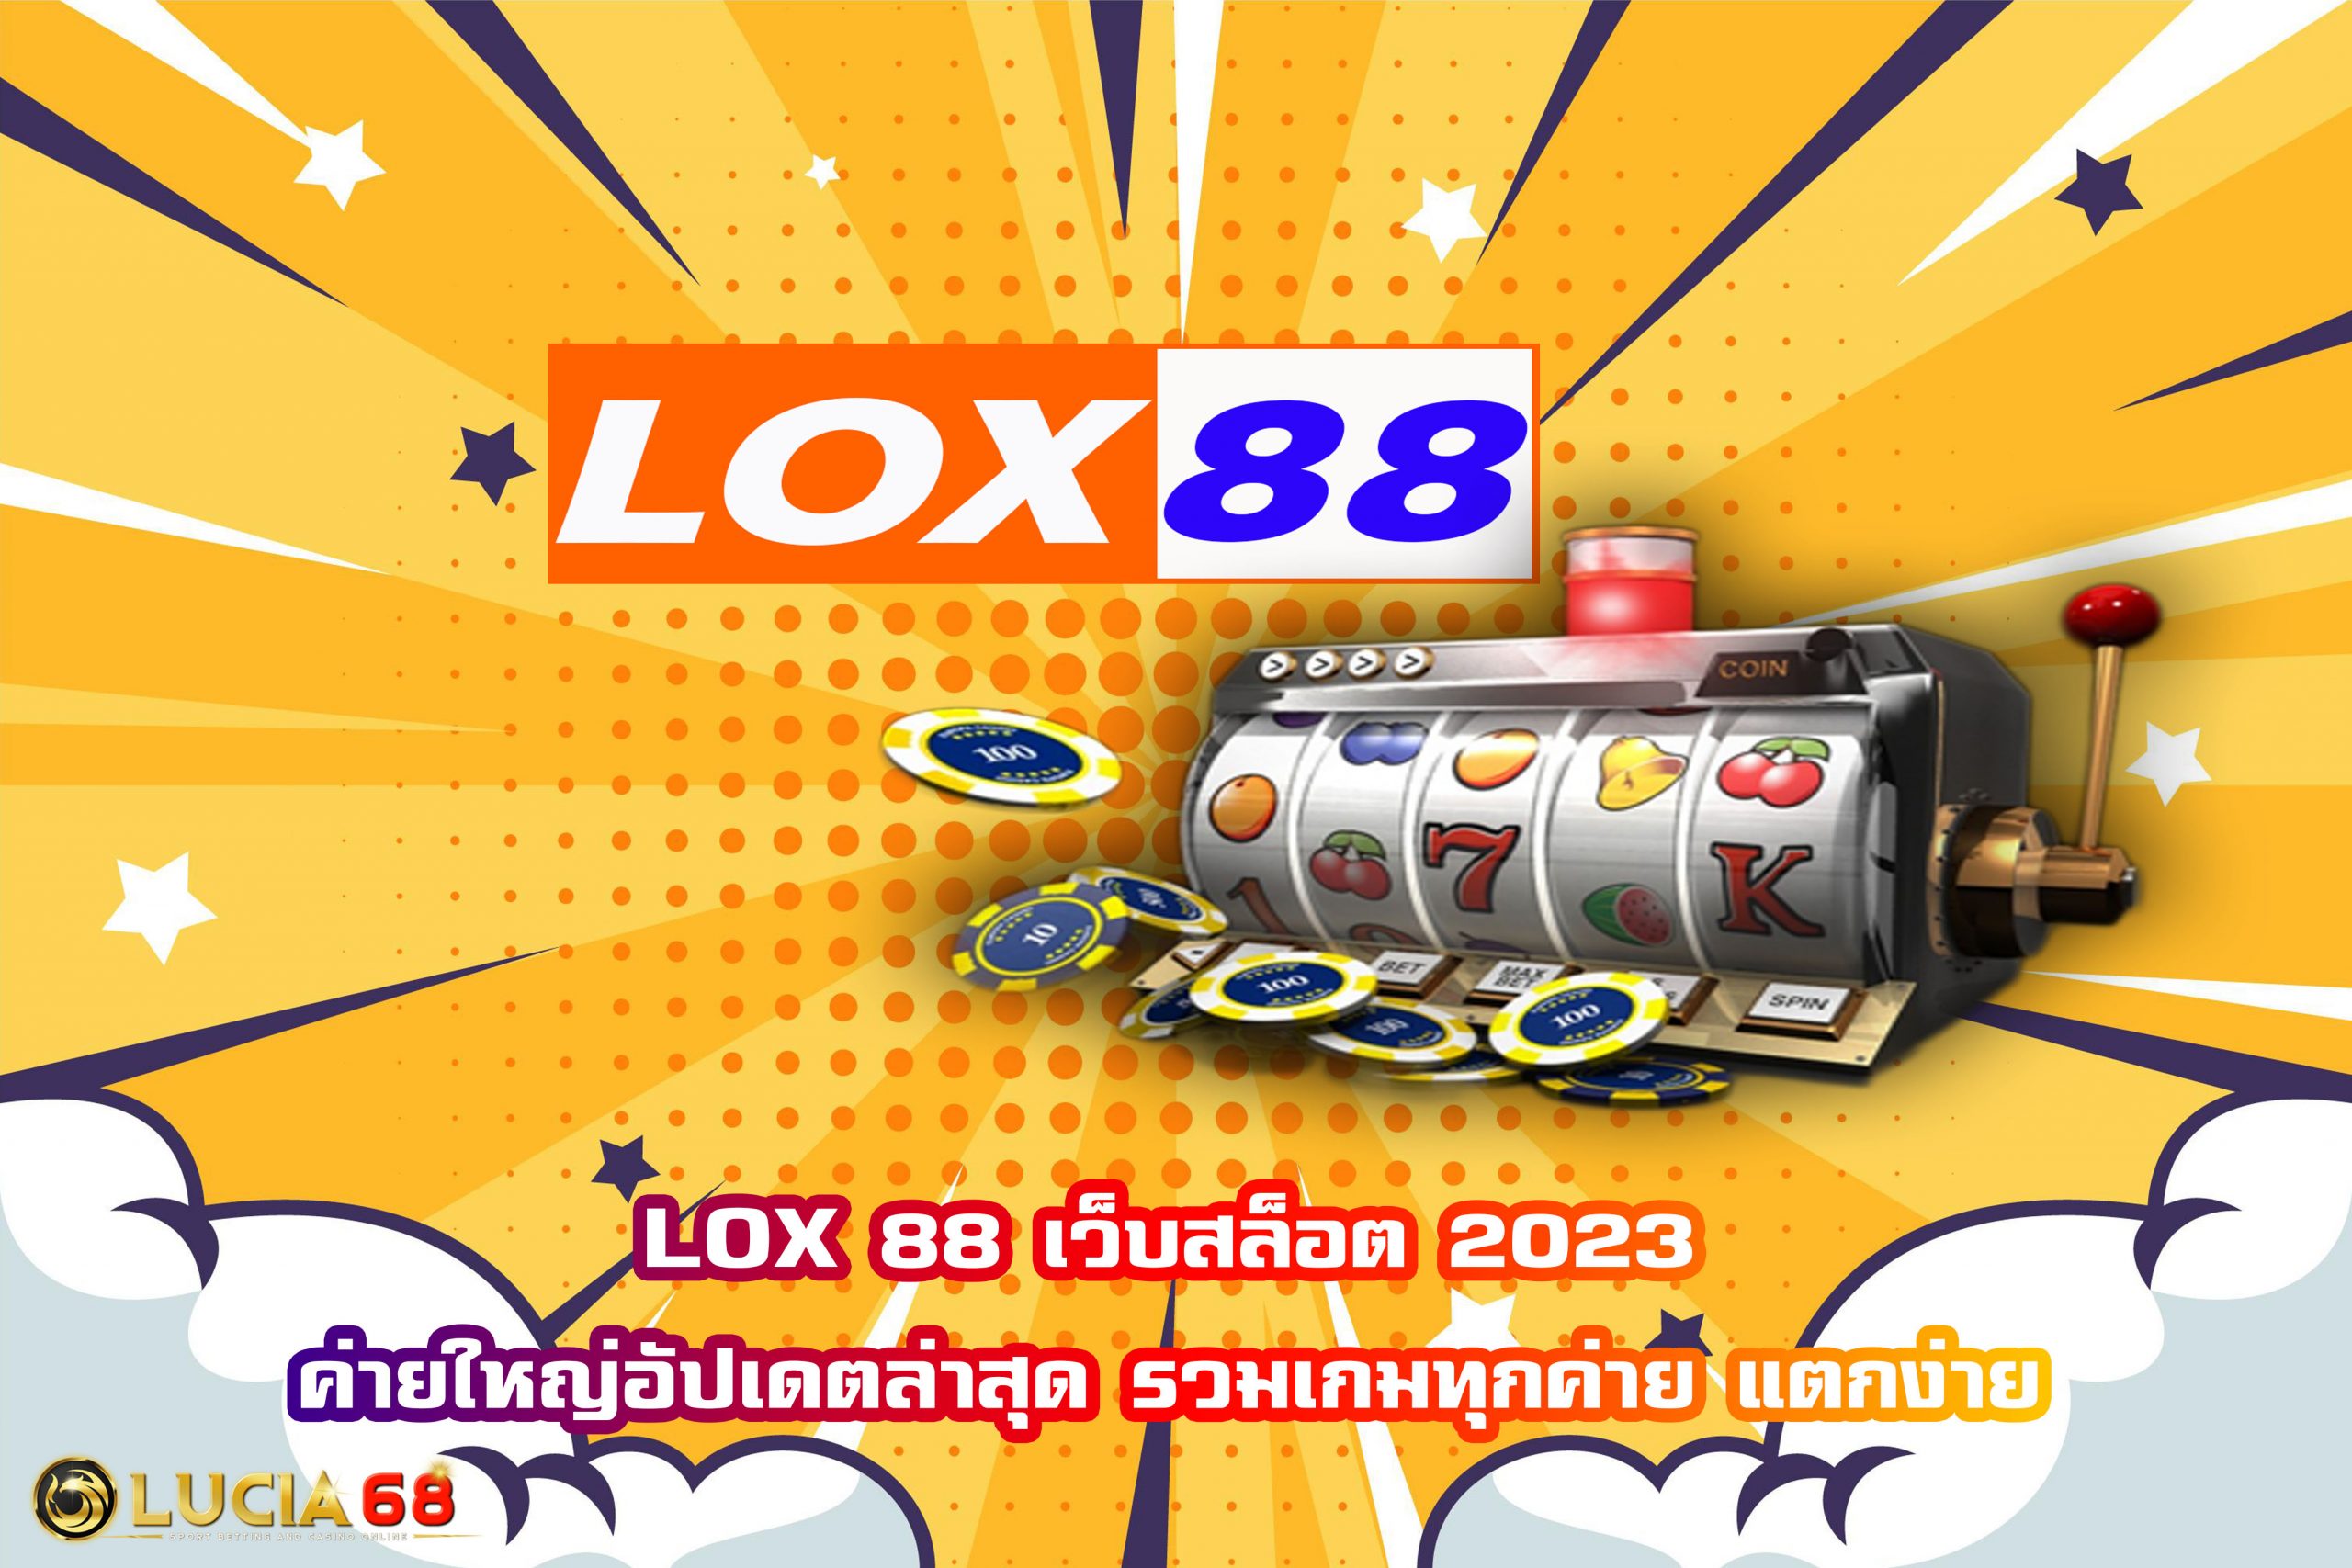 LOX 88 เว็บสล็อต 2023 ค่ายใหญ่อัปเดตล่าสุด รวมเกมทุกค่าย แตกง่าย